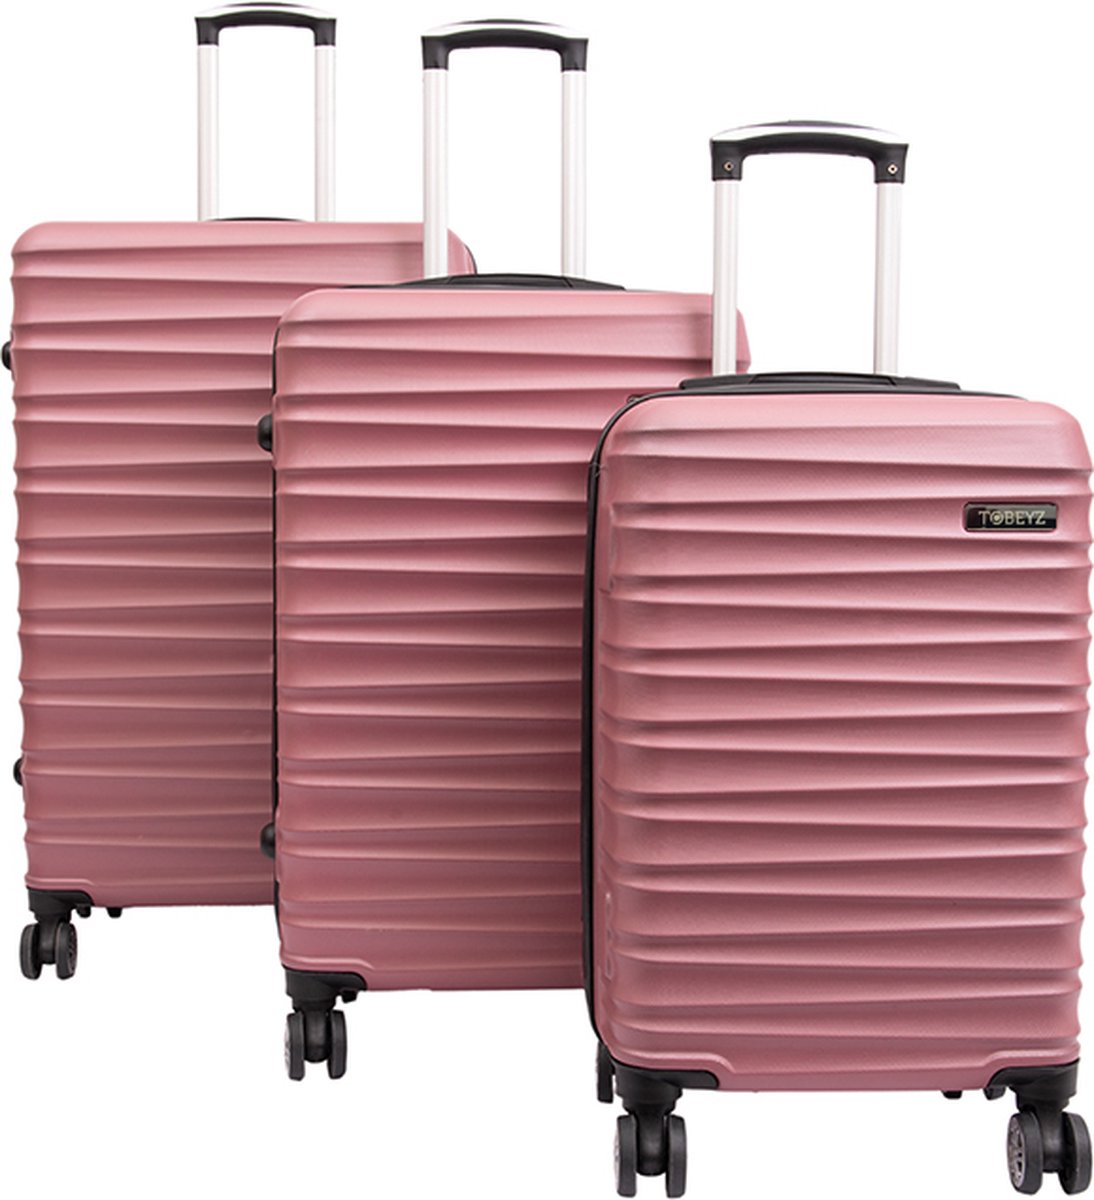 Tobeyz - Kofferset - 3-delig Roze Handbagage - Verrijdbaar op 4 Wielen - Stevig ABS - Lichtgewicht, Trolley